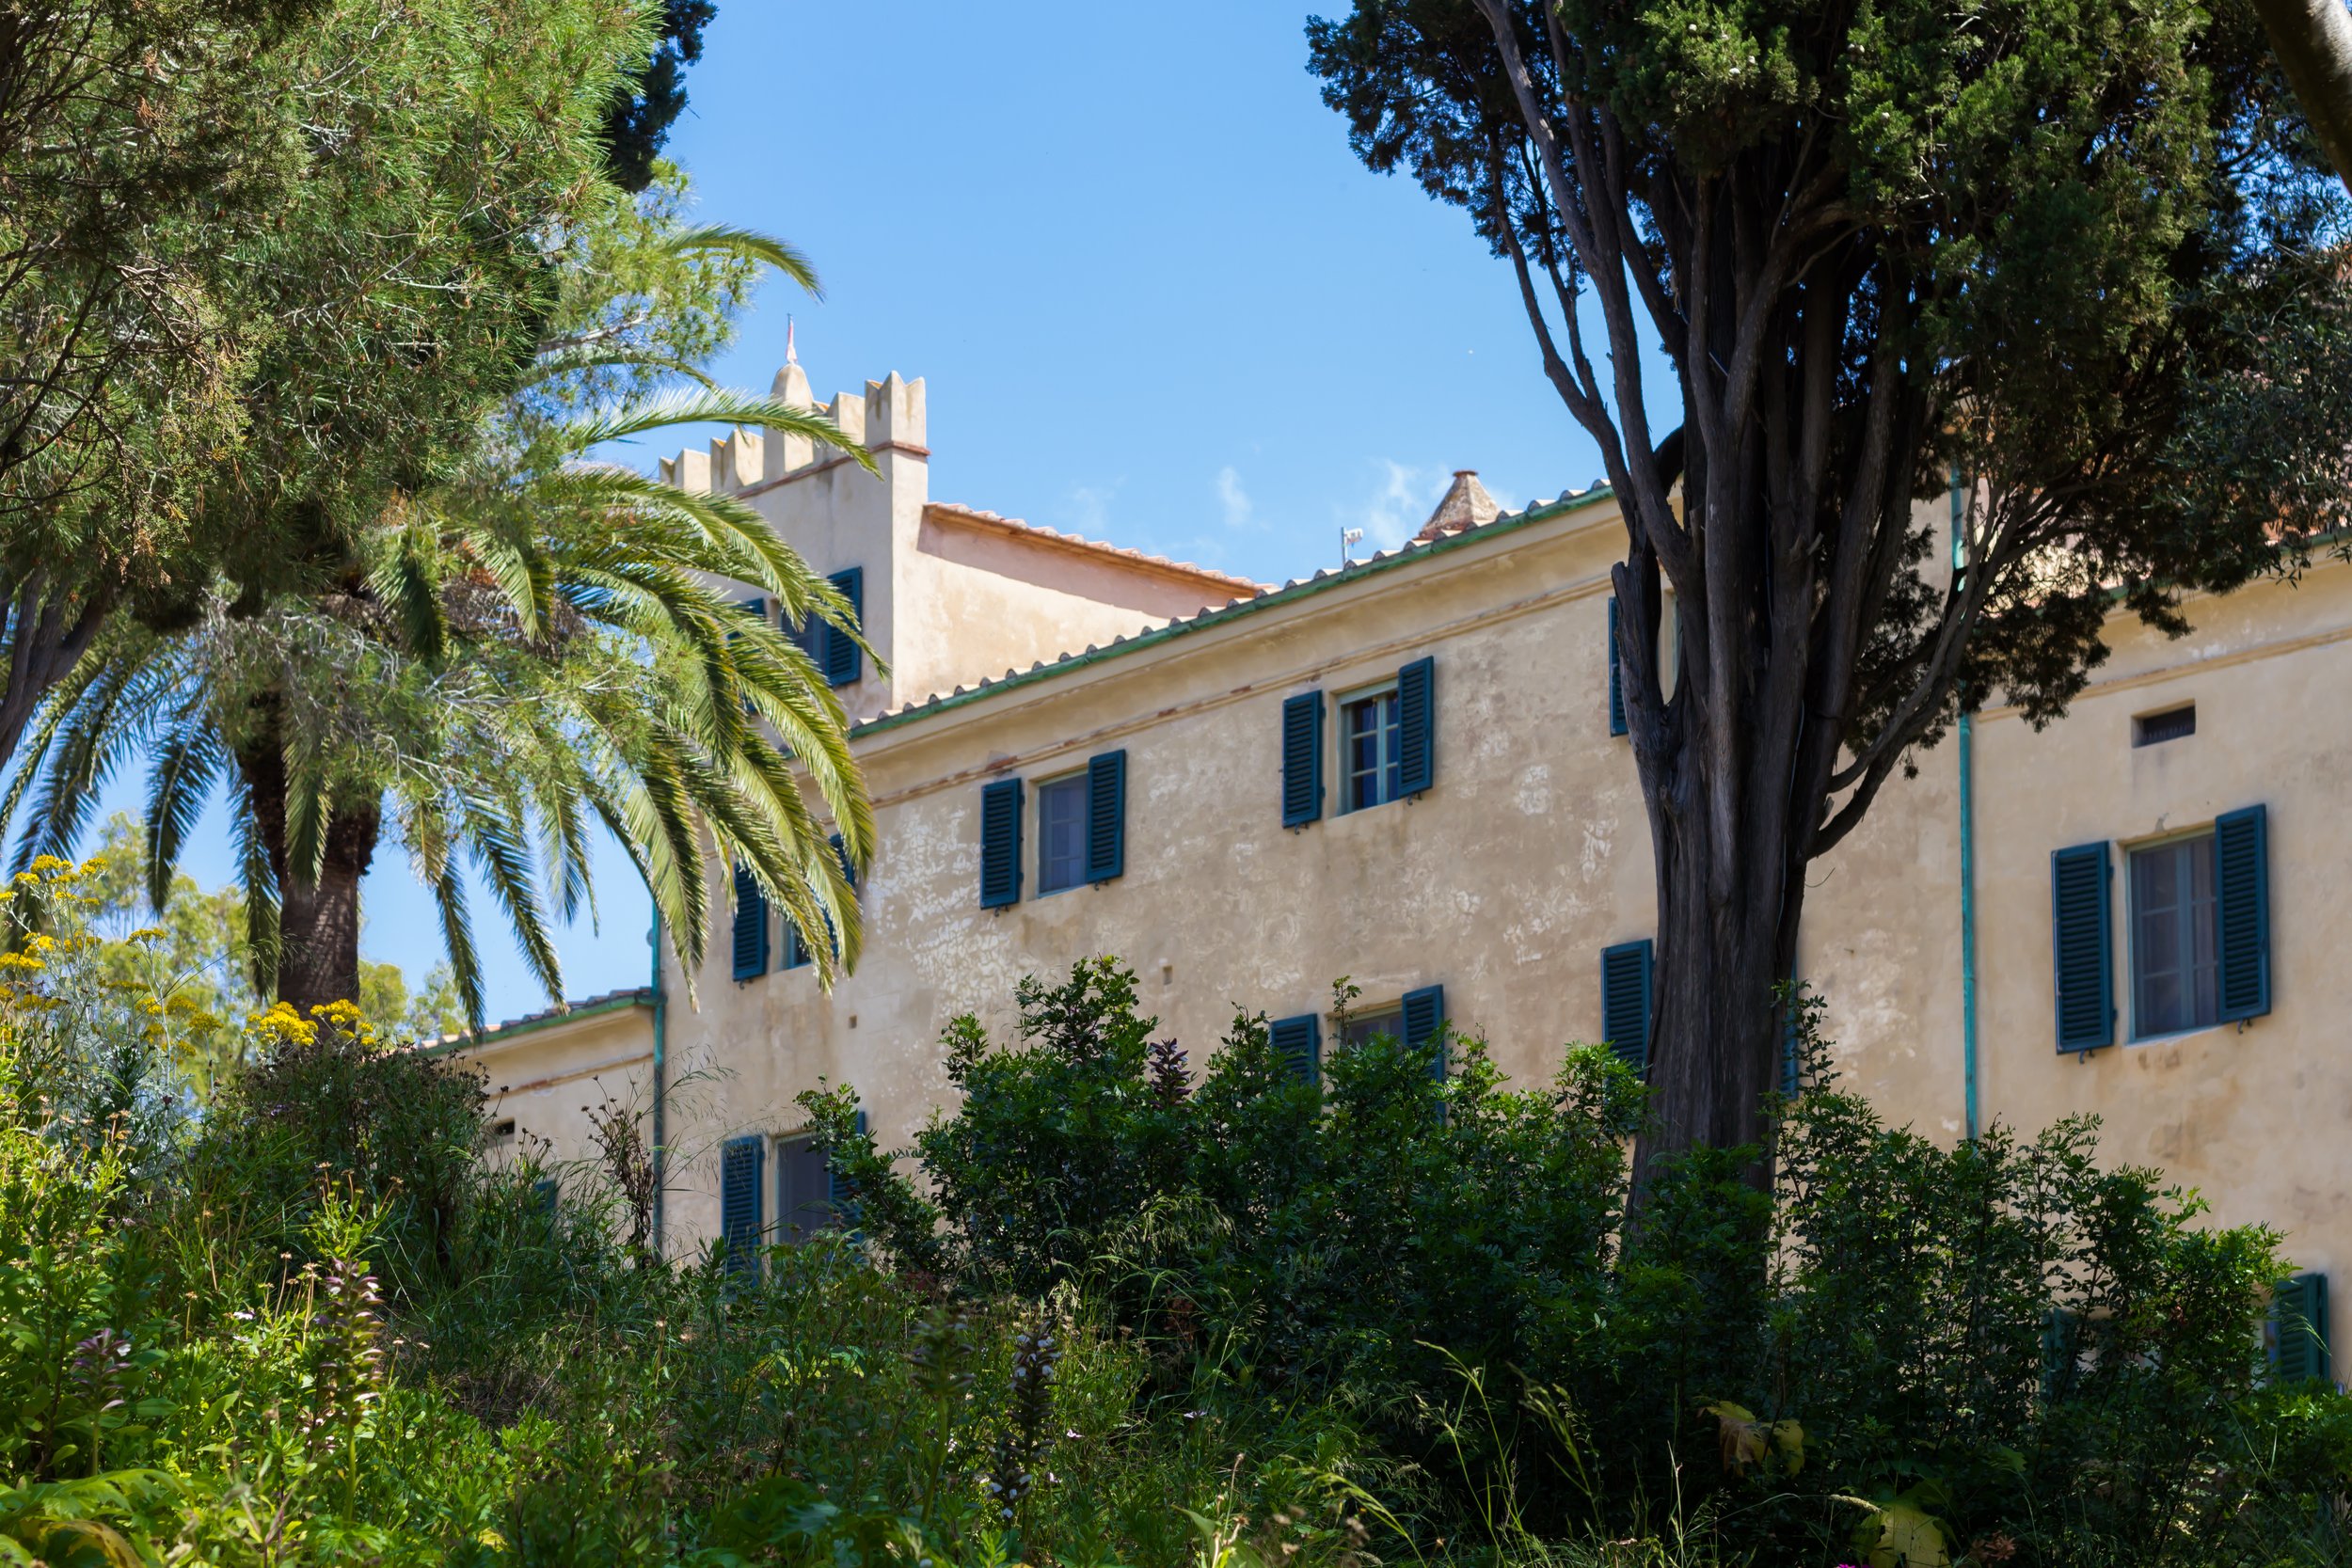 Francis York Luxury Villa Rental on the Tuscan Coast 11.jpg